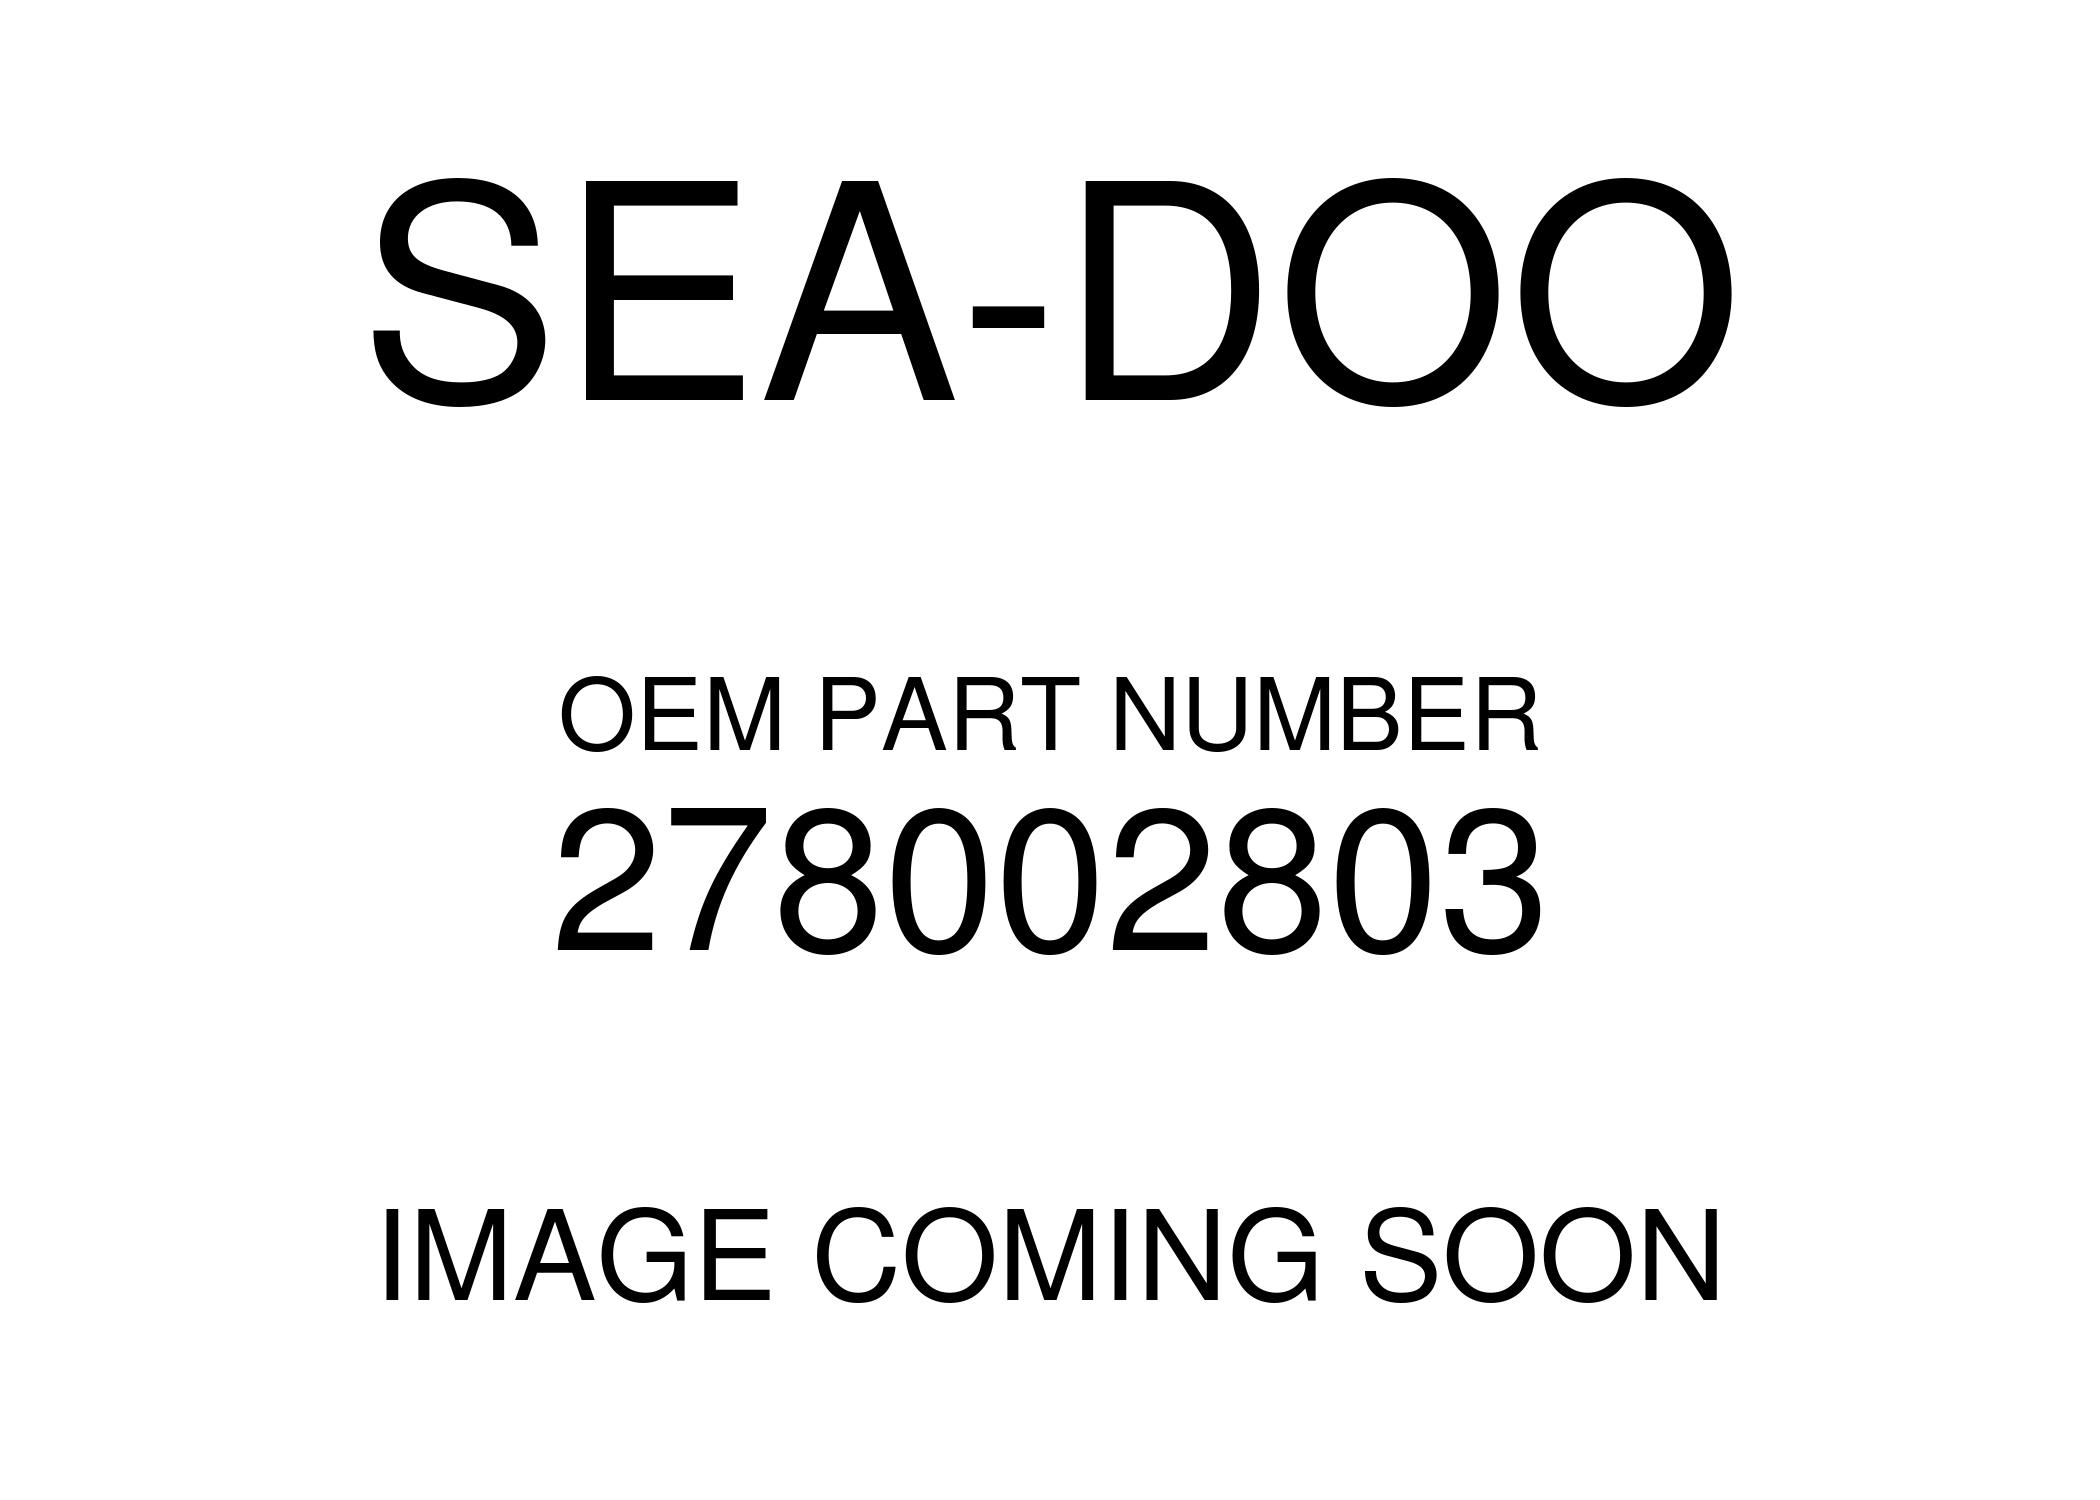 Sea-Doo Cadran Info Lcd Gauge 278002803 New Oem 